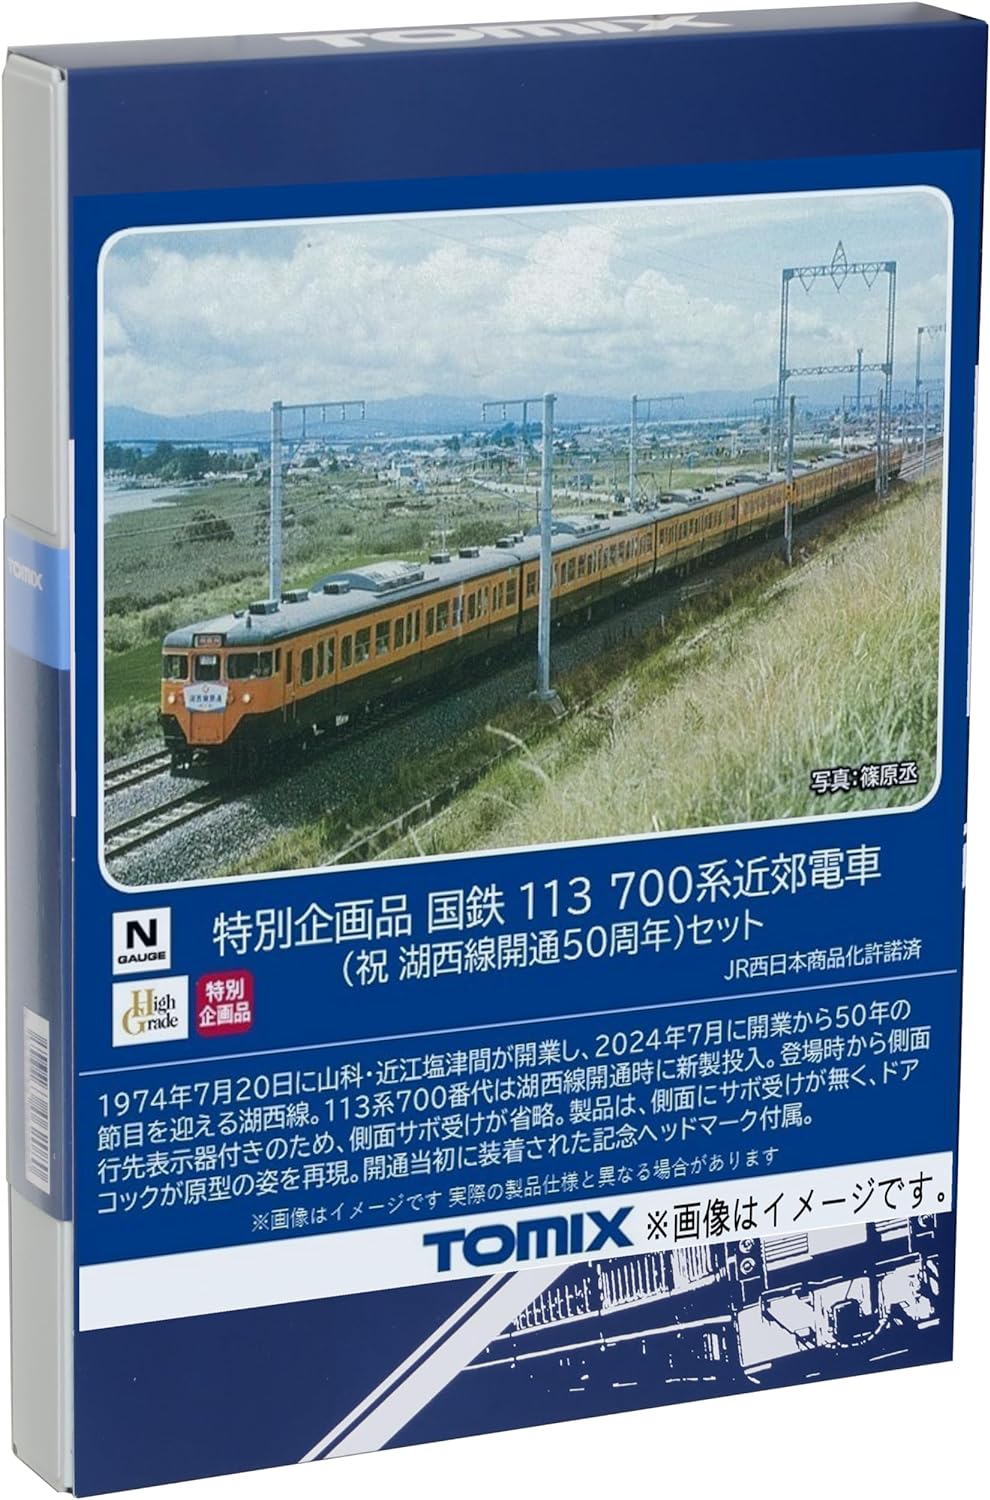 [PO JUL 2024]  TOMIX N Gauge Special Project JNR 113 700 Series Celebration Kosai Line 50th Anniversary Set 97960 - BanzaiHobby